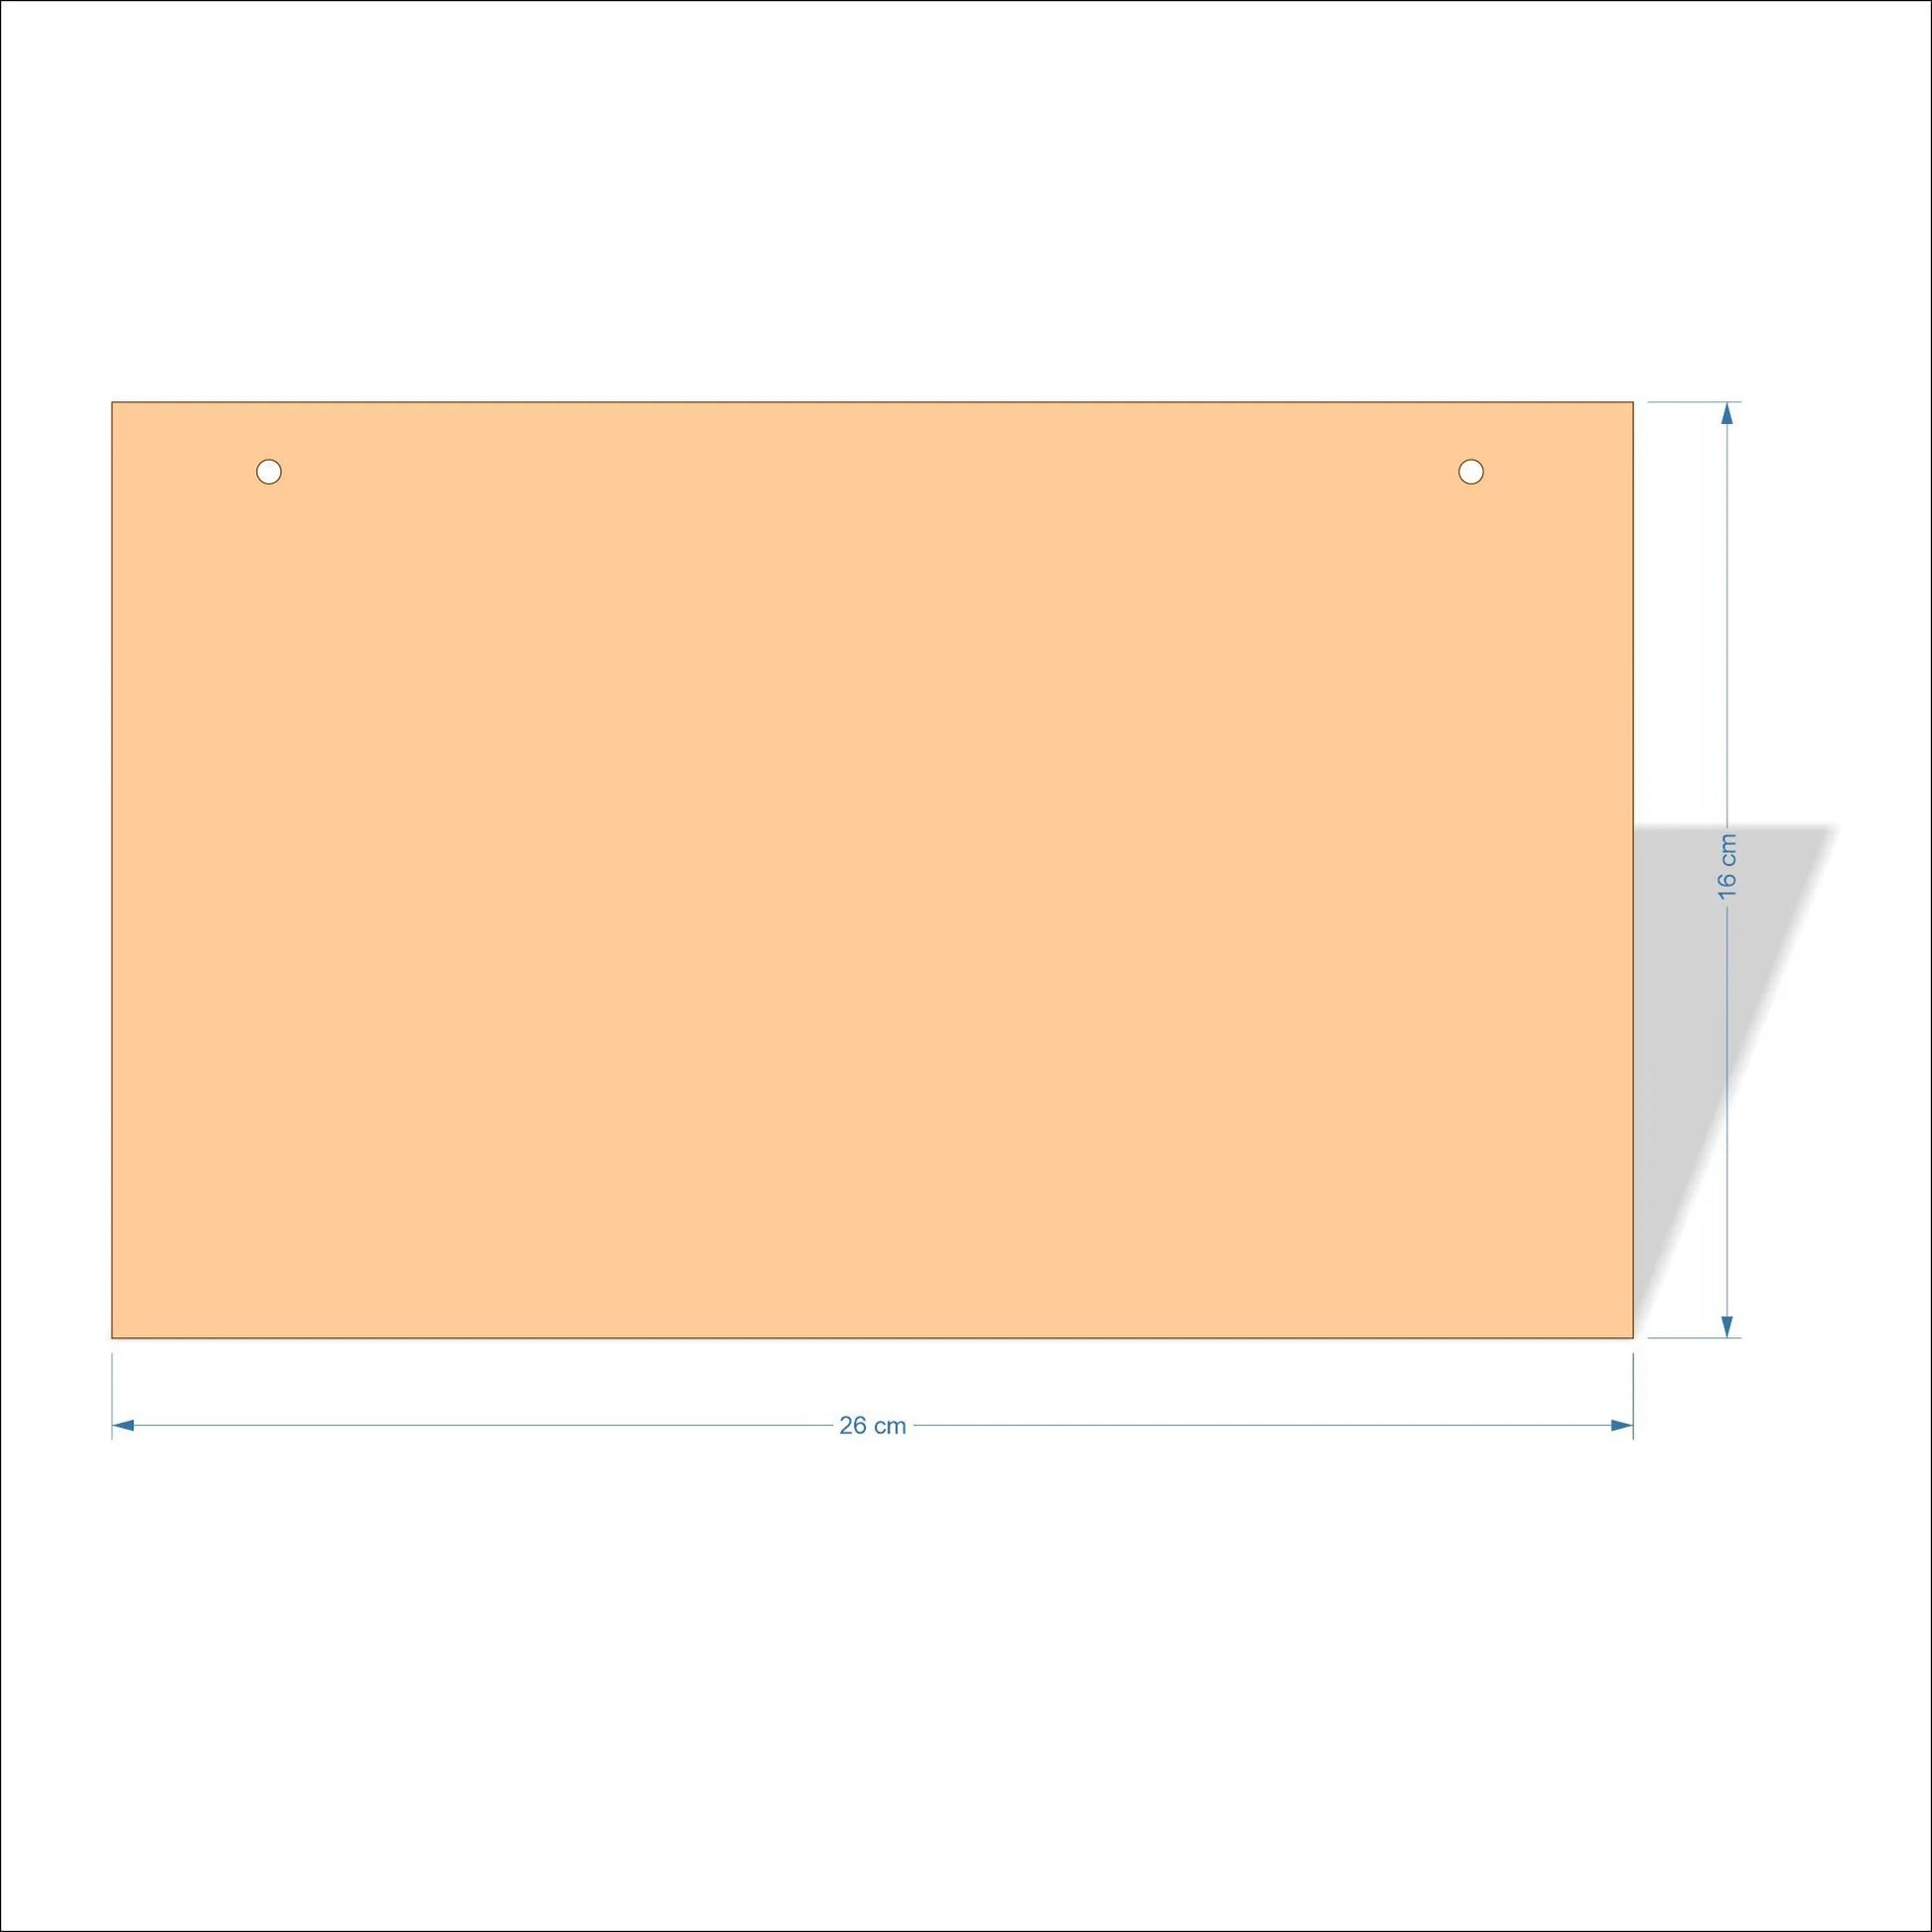 26 cm X 16 cm 4mm poplar plywood Plaques with square corners